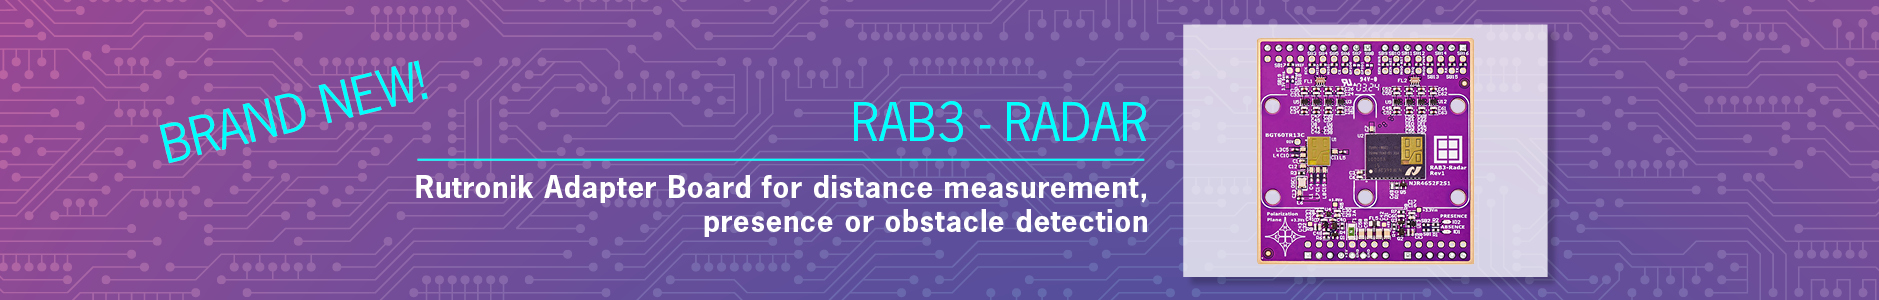 Rutronik Adapter Board – RAB3 for Radar